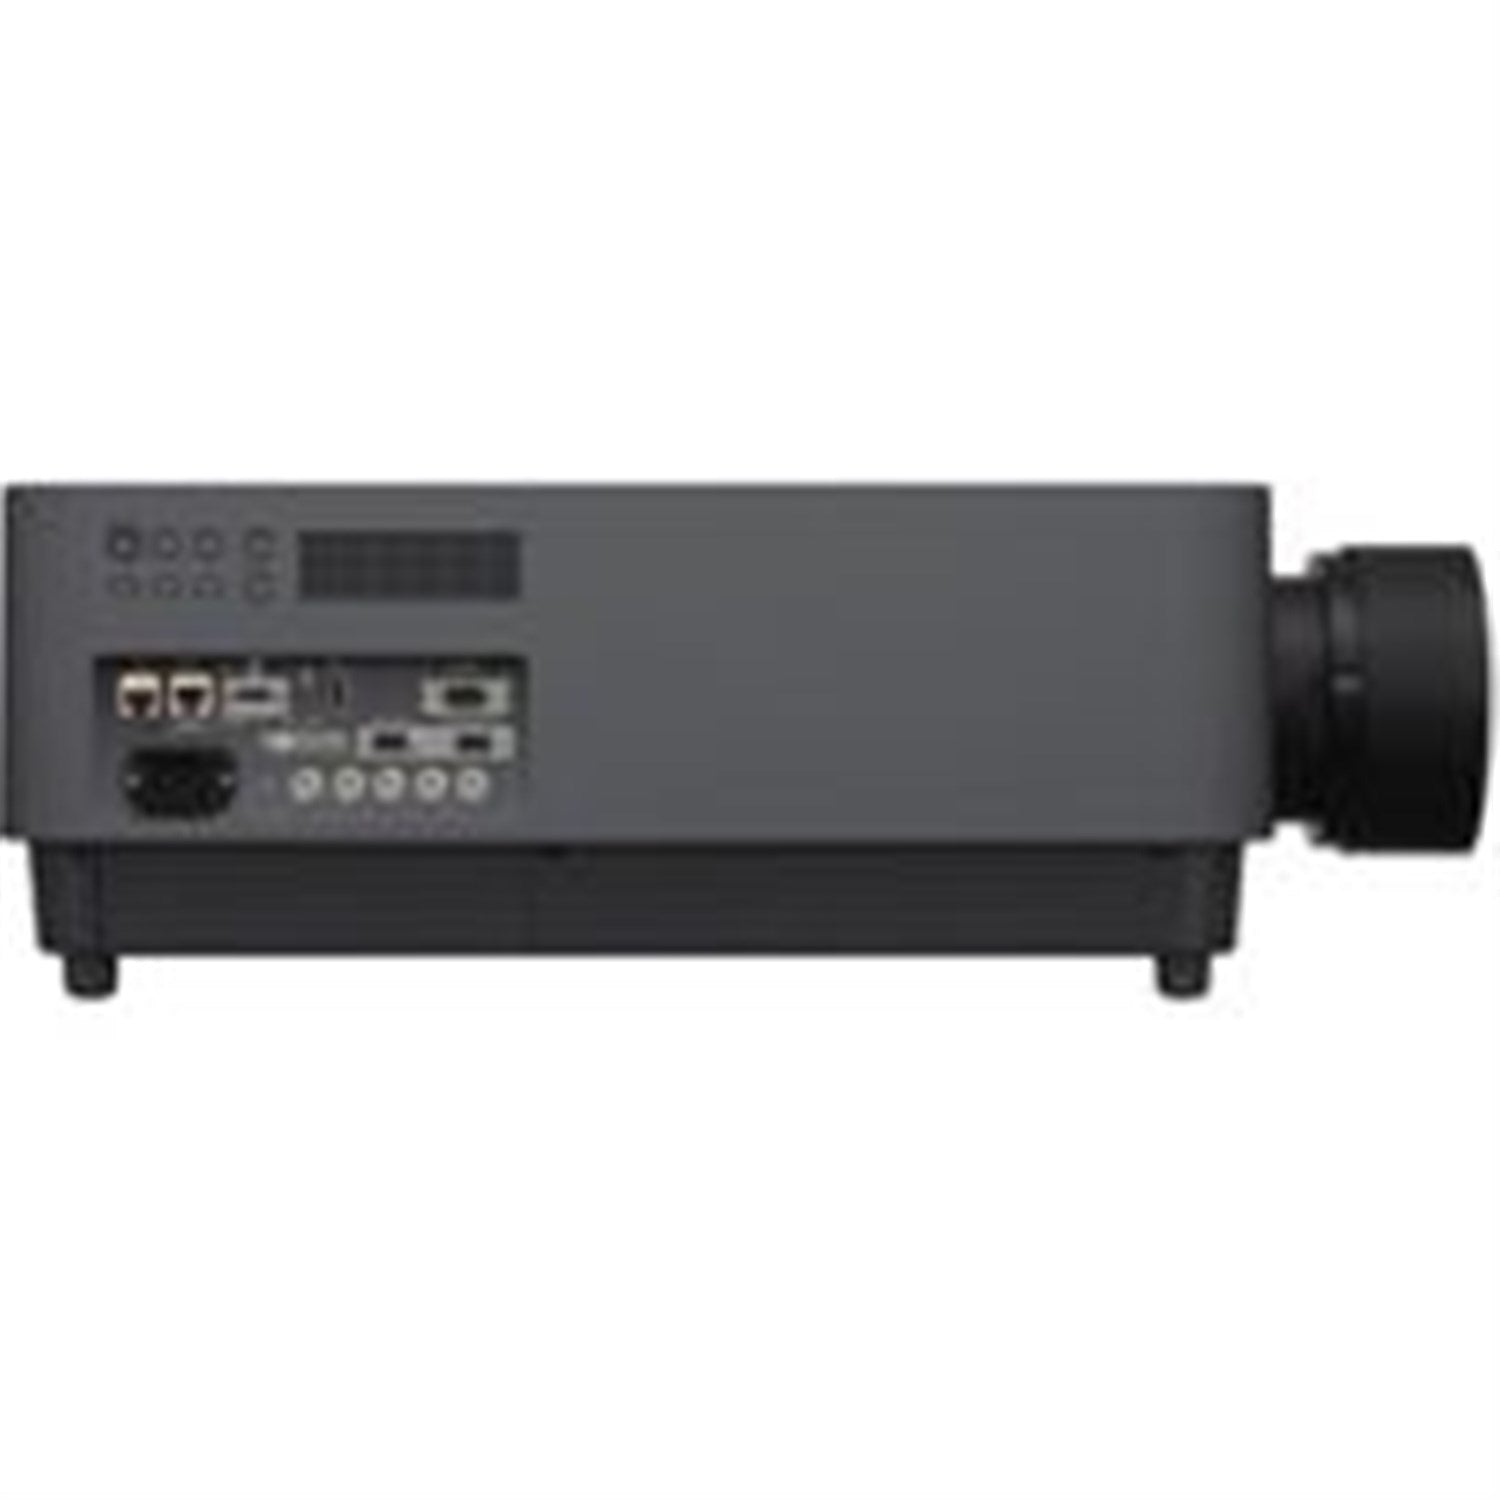 SONY - VPL-FHZ91L WUXGA 9000 lm Laser 3LCD Projector - Black